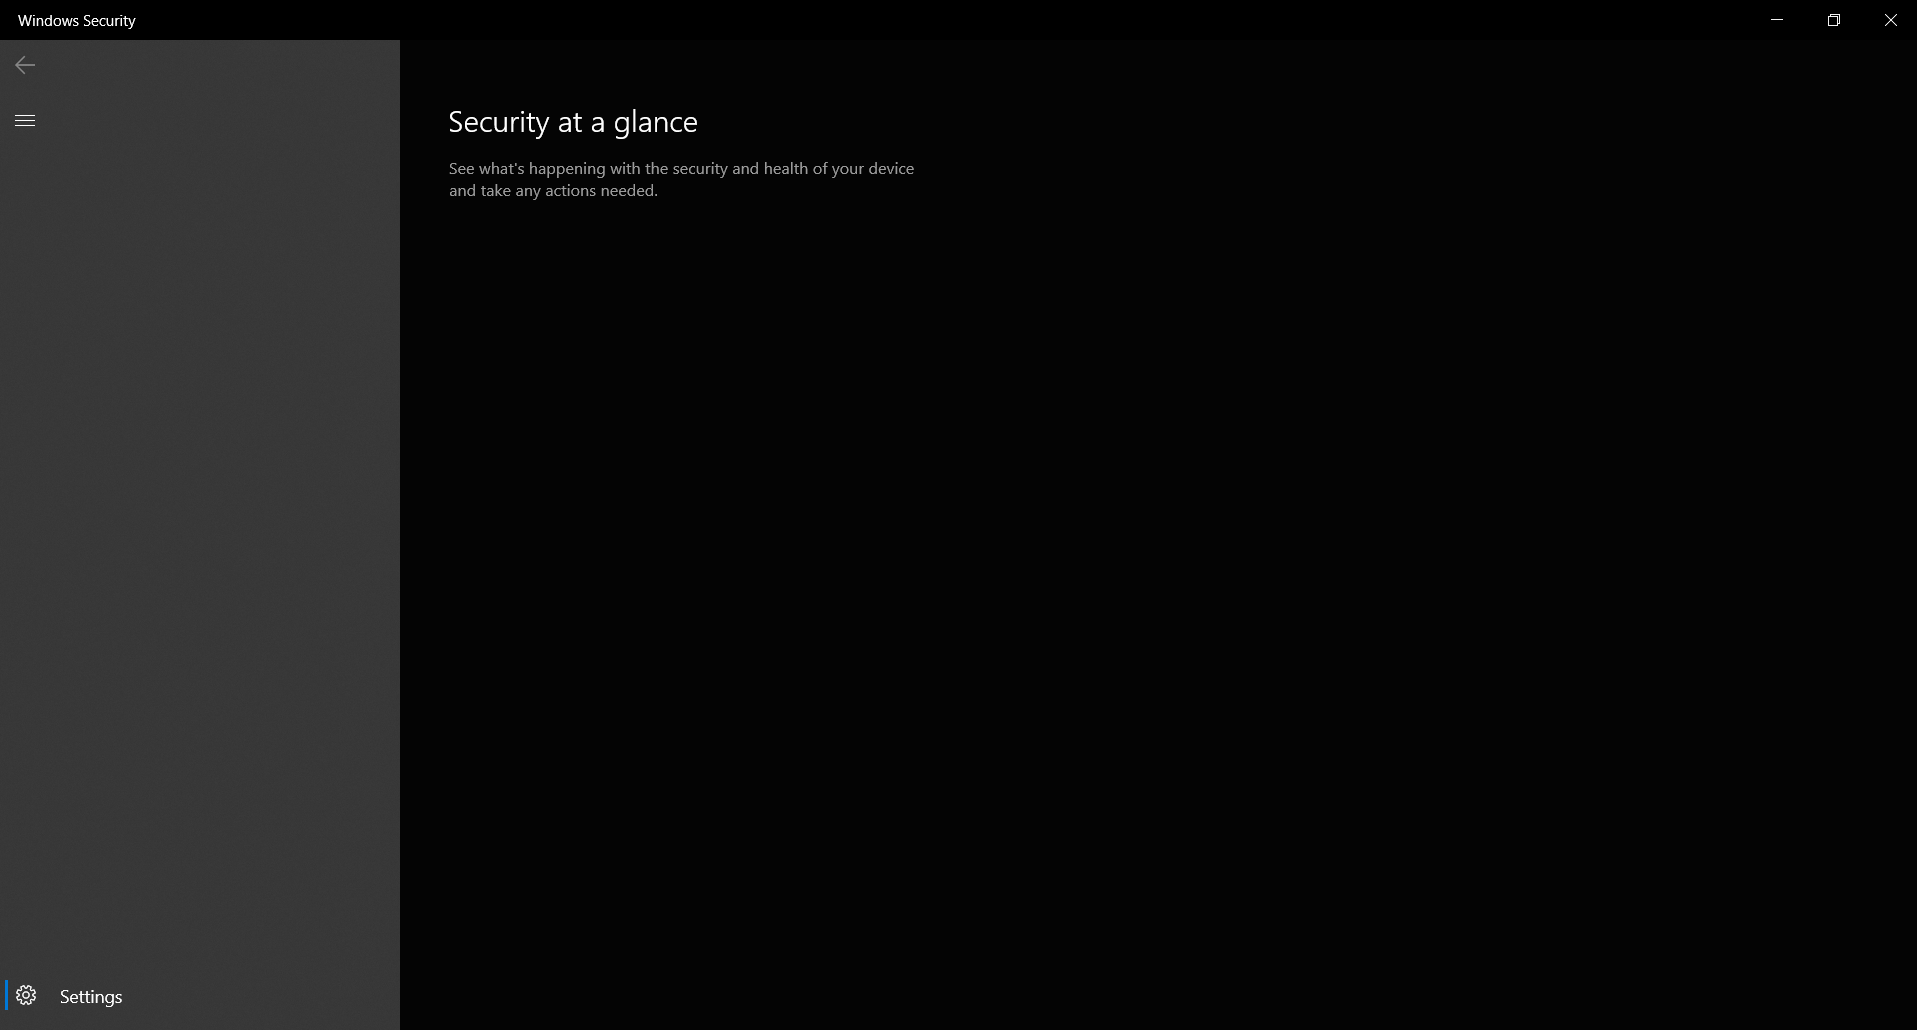 Windows Security is blank 6139612b-0c5a-4792-b315-8006819cb7d0?upload=true.png